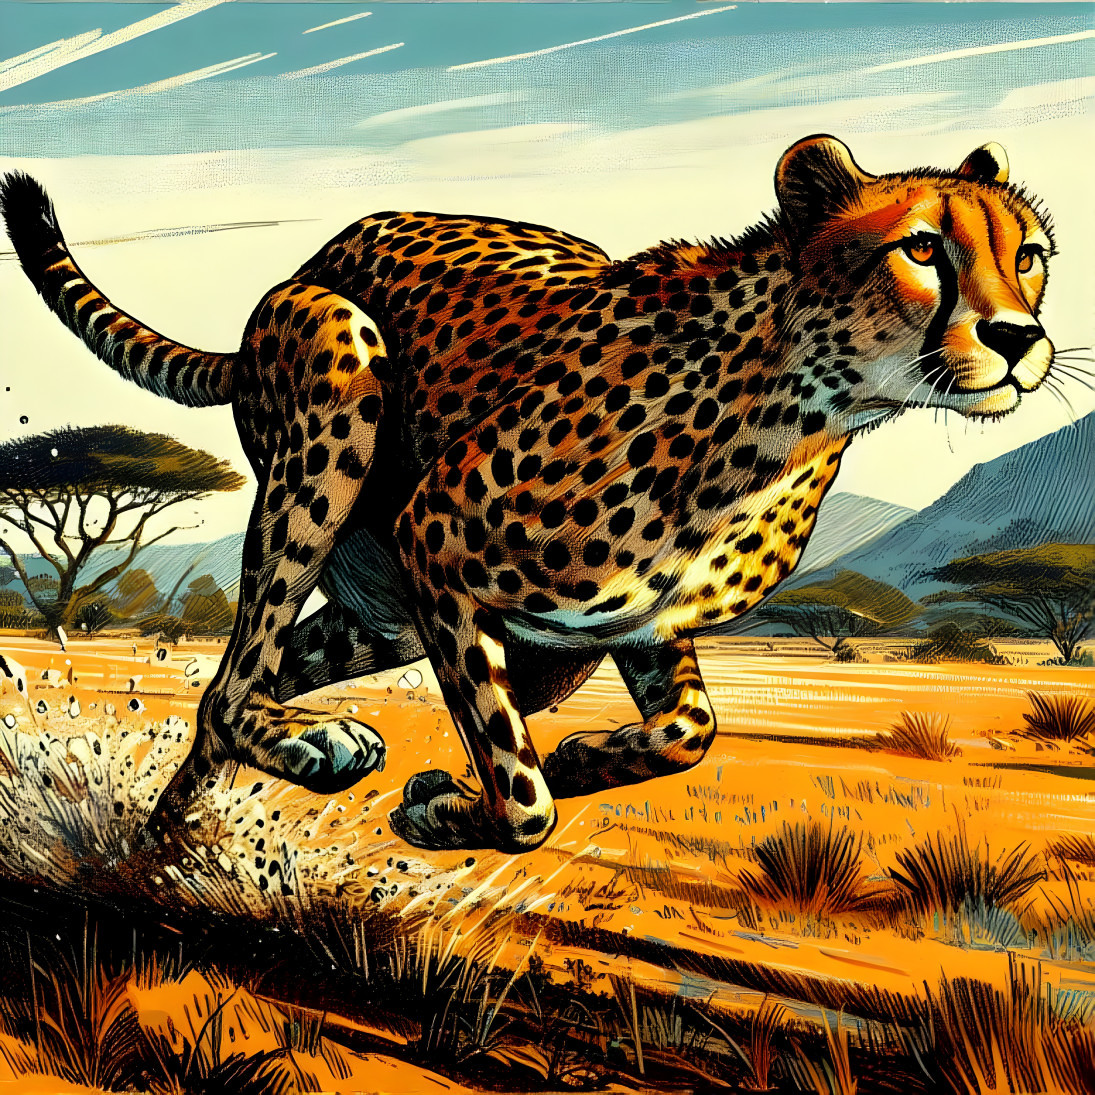 Sprinting Cheetah